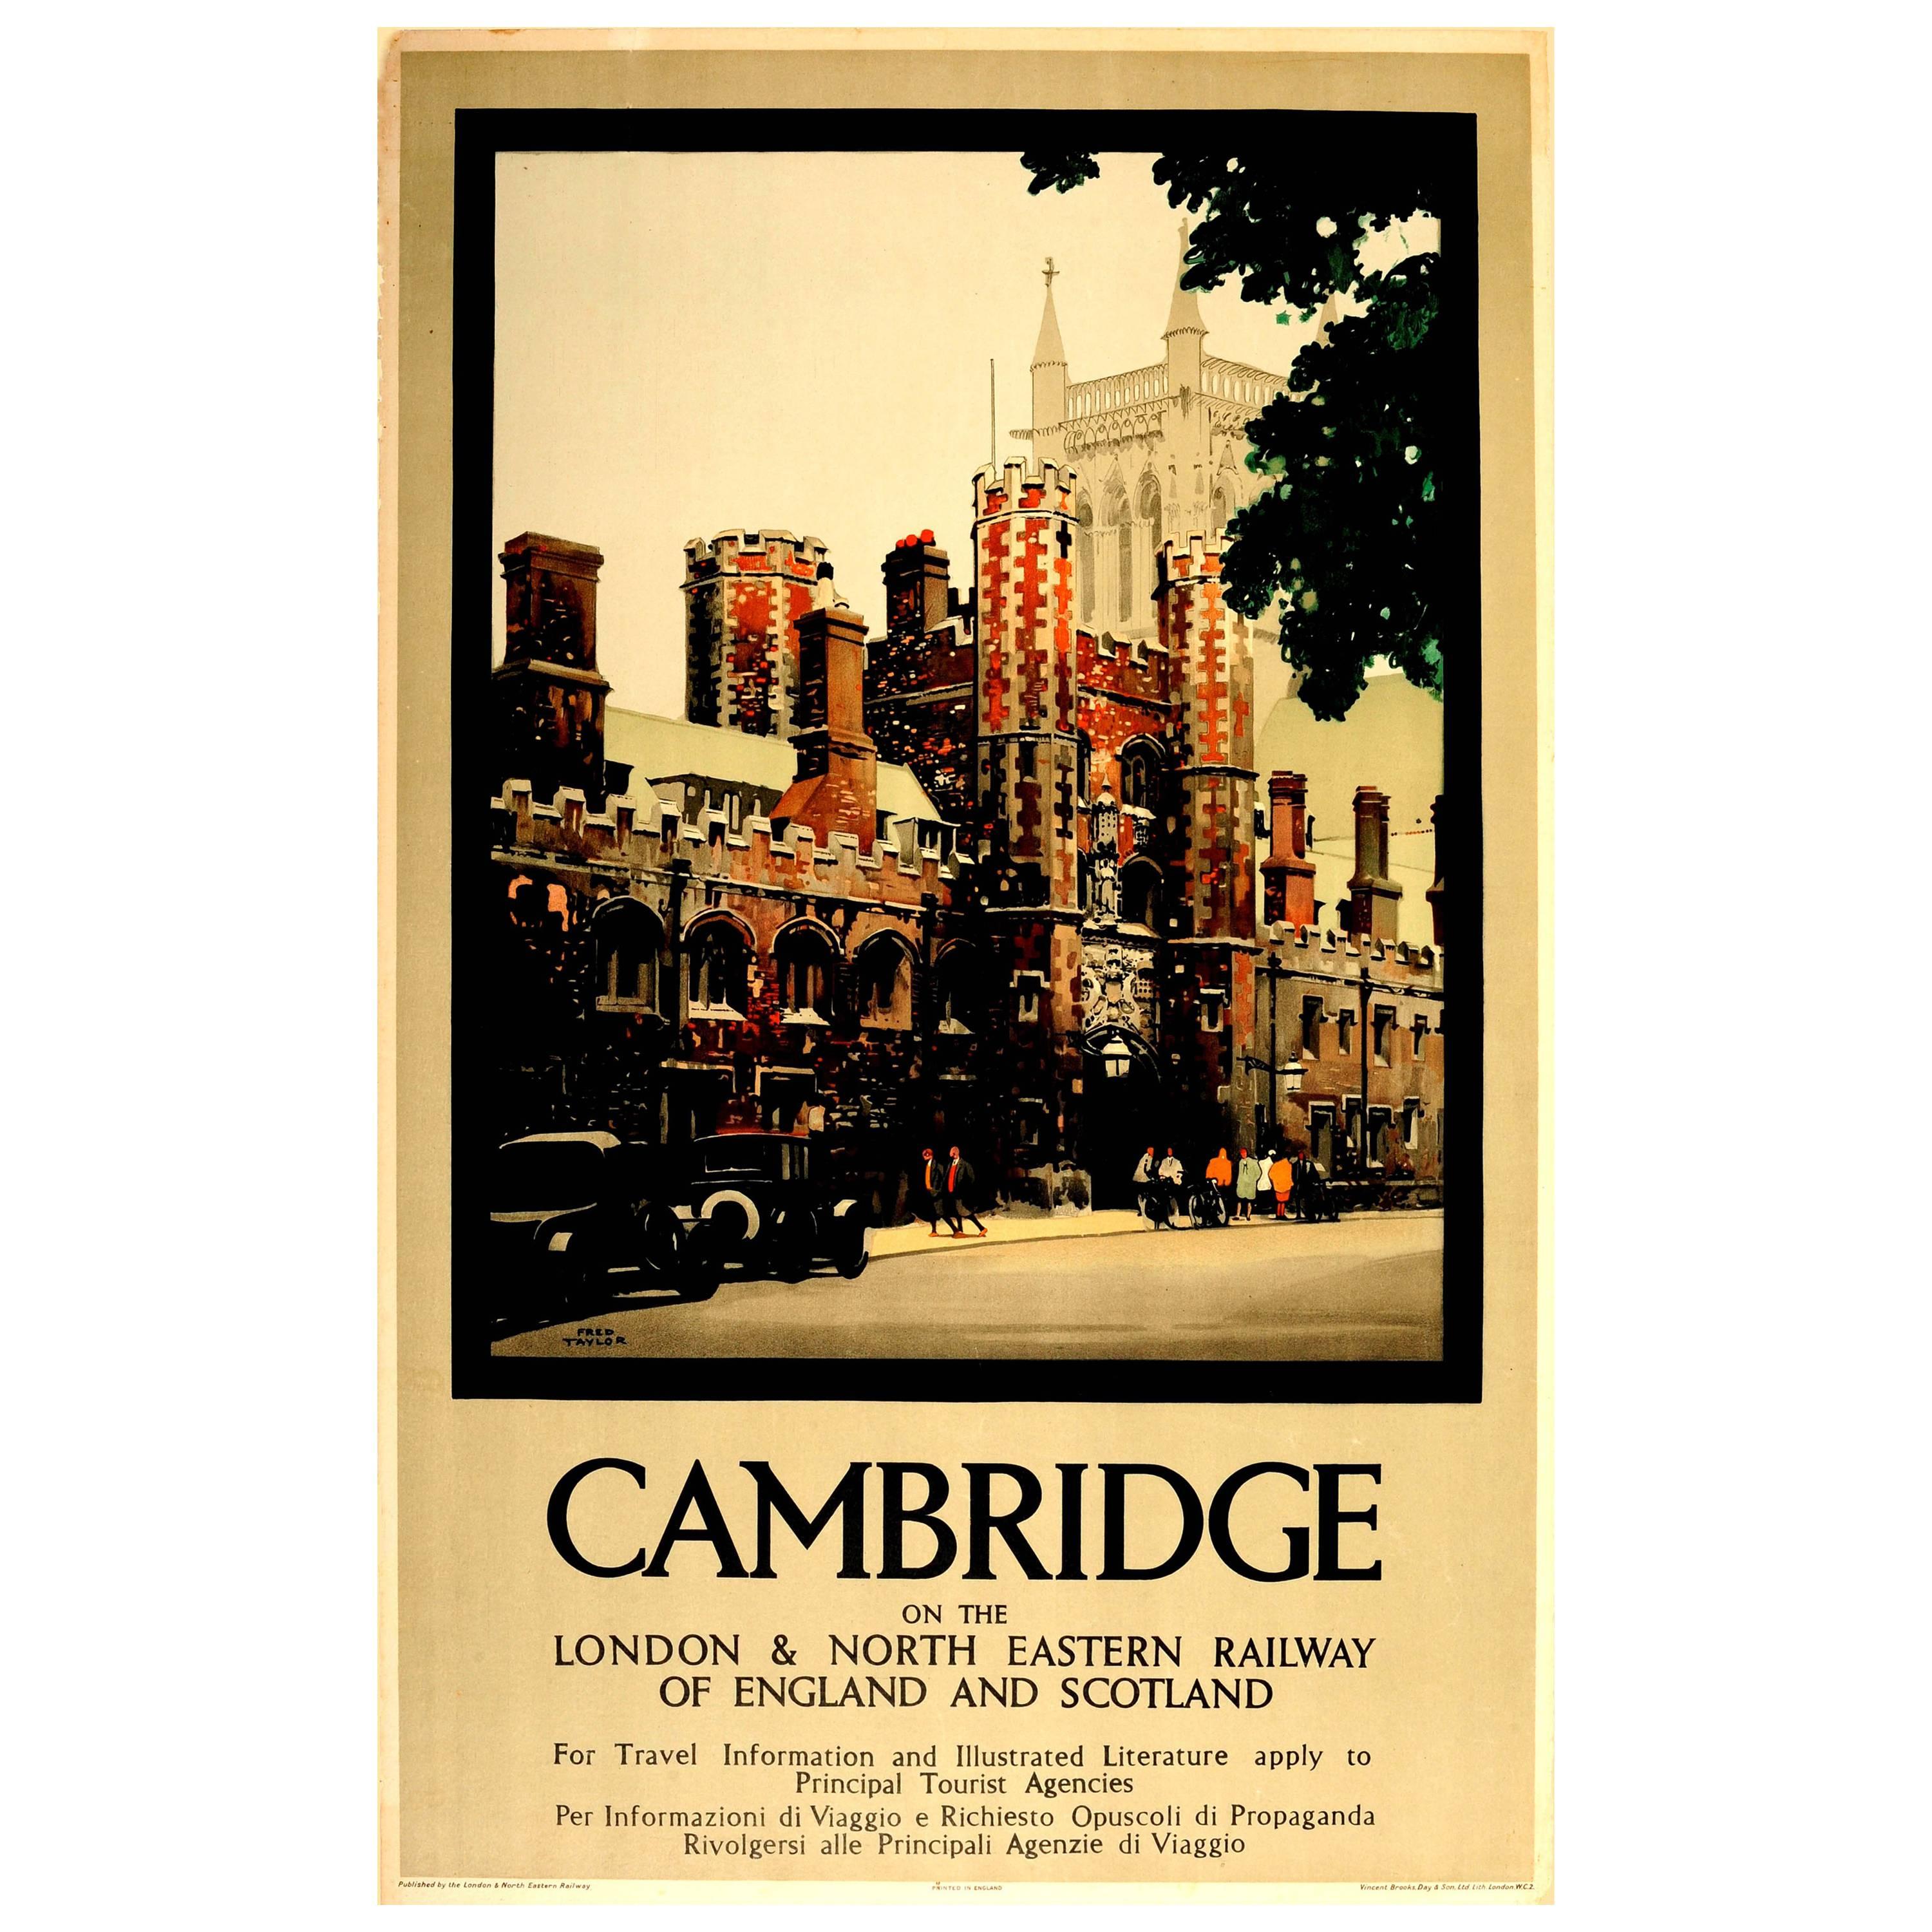 Original London & North Eastern Railway LNER Travel Poster Advertising Cambridge